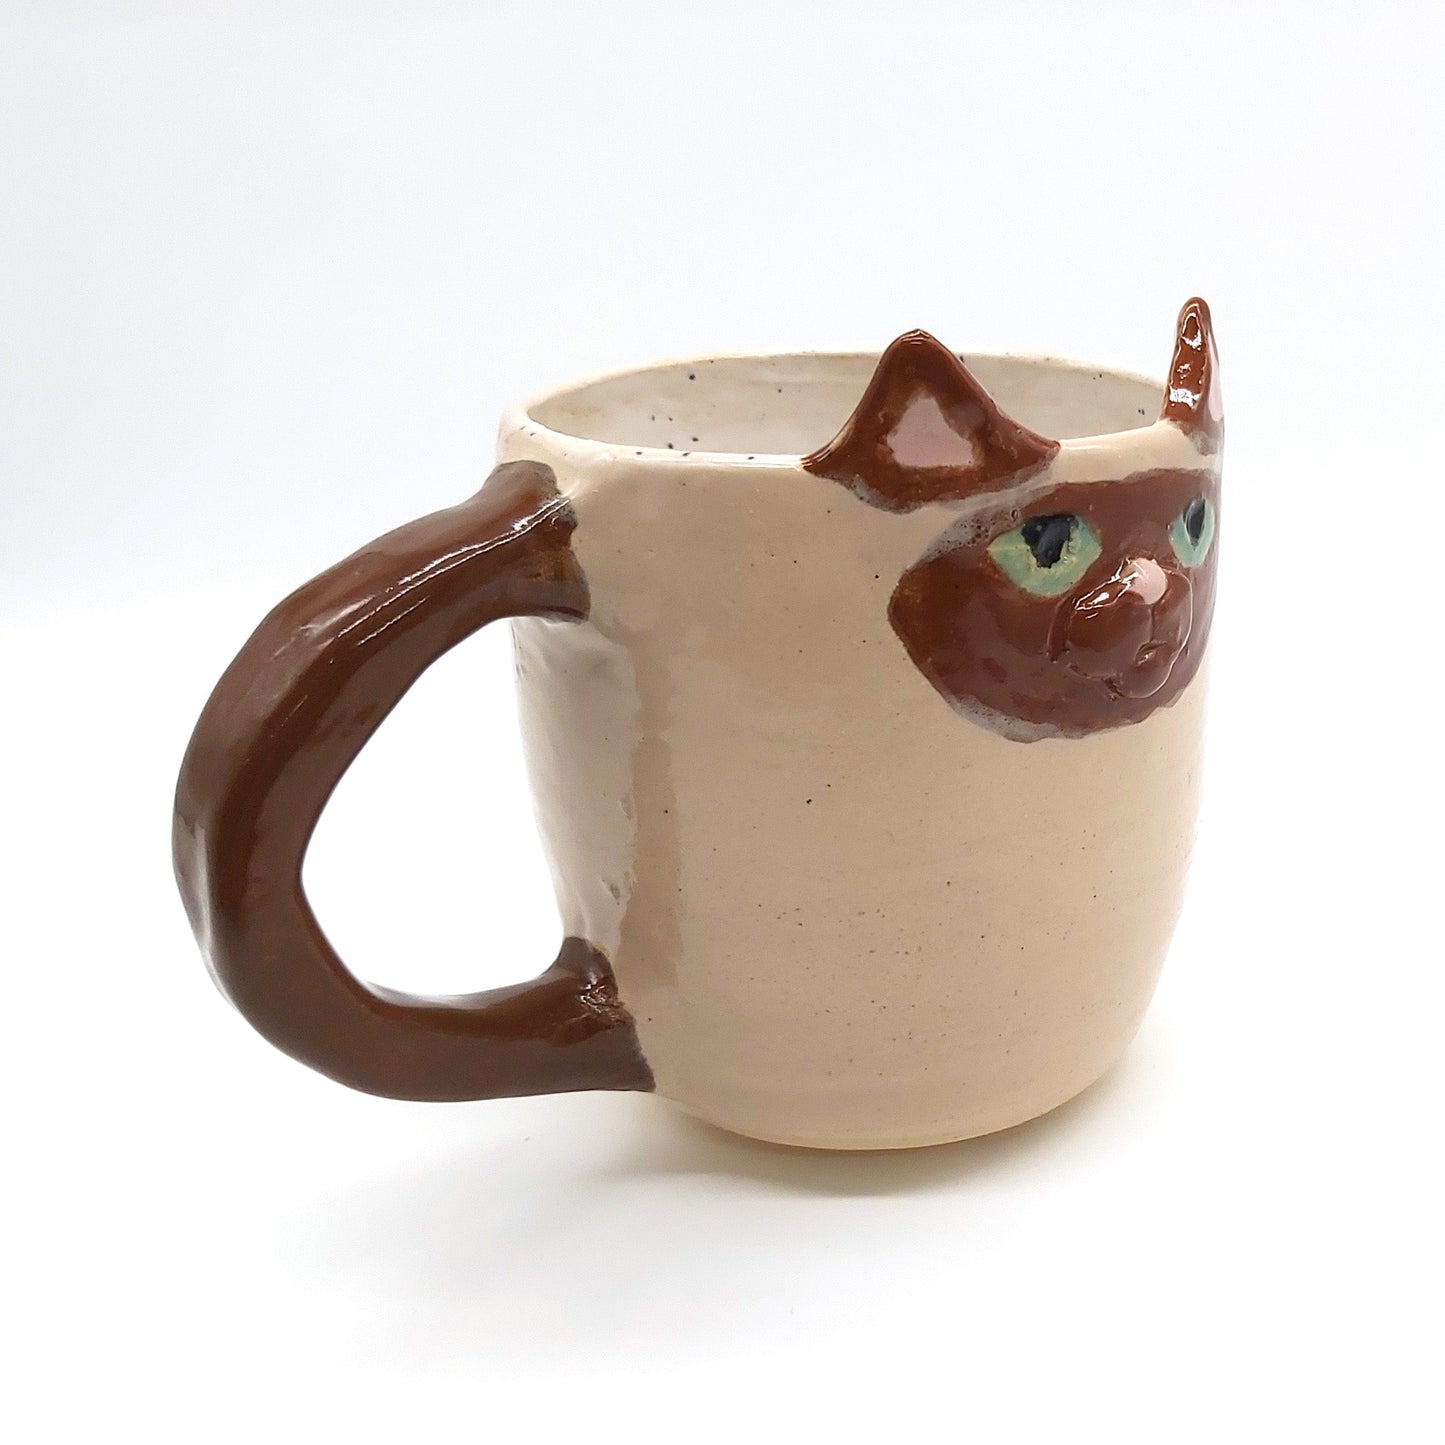 Siamese Cat Mug (Sam II)